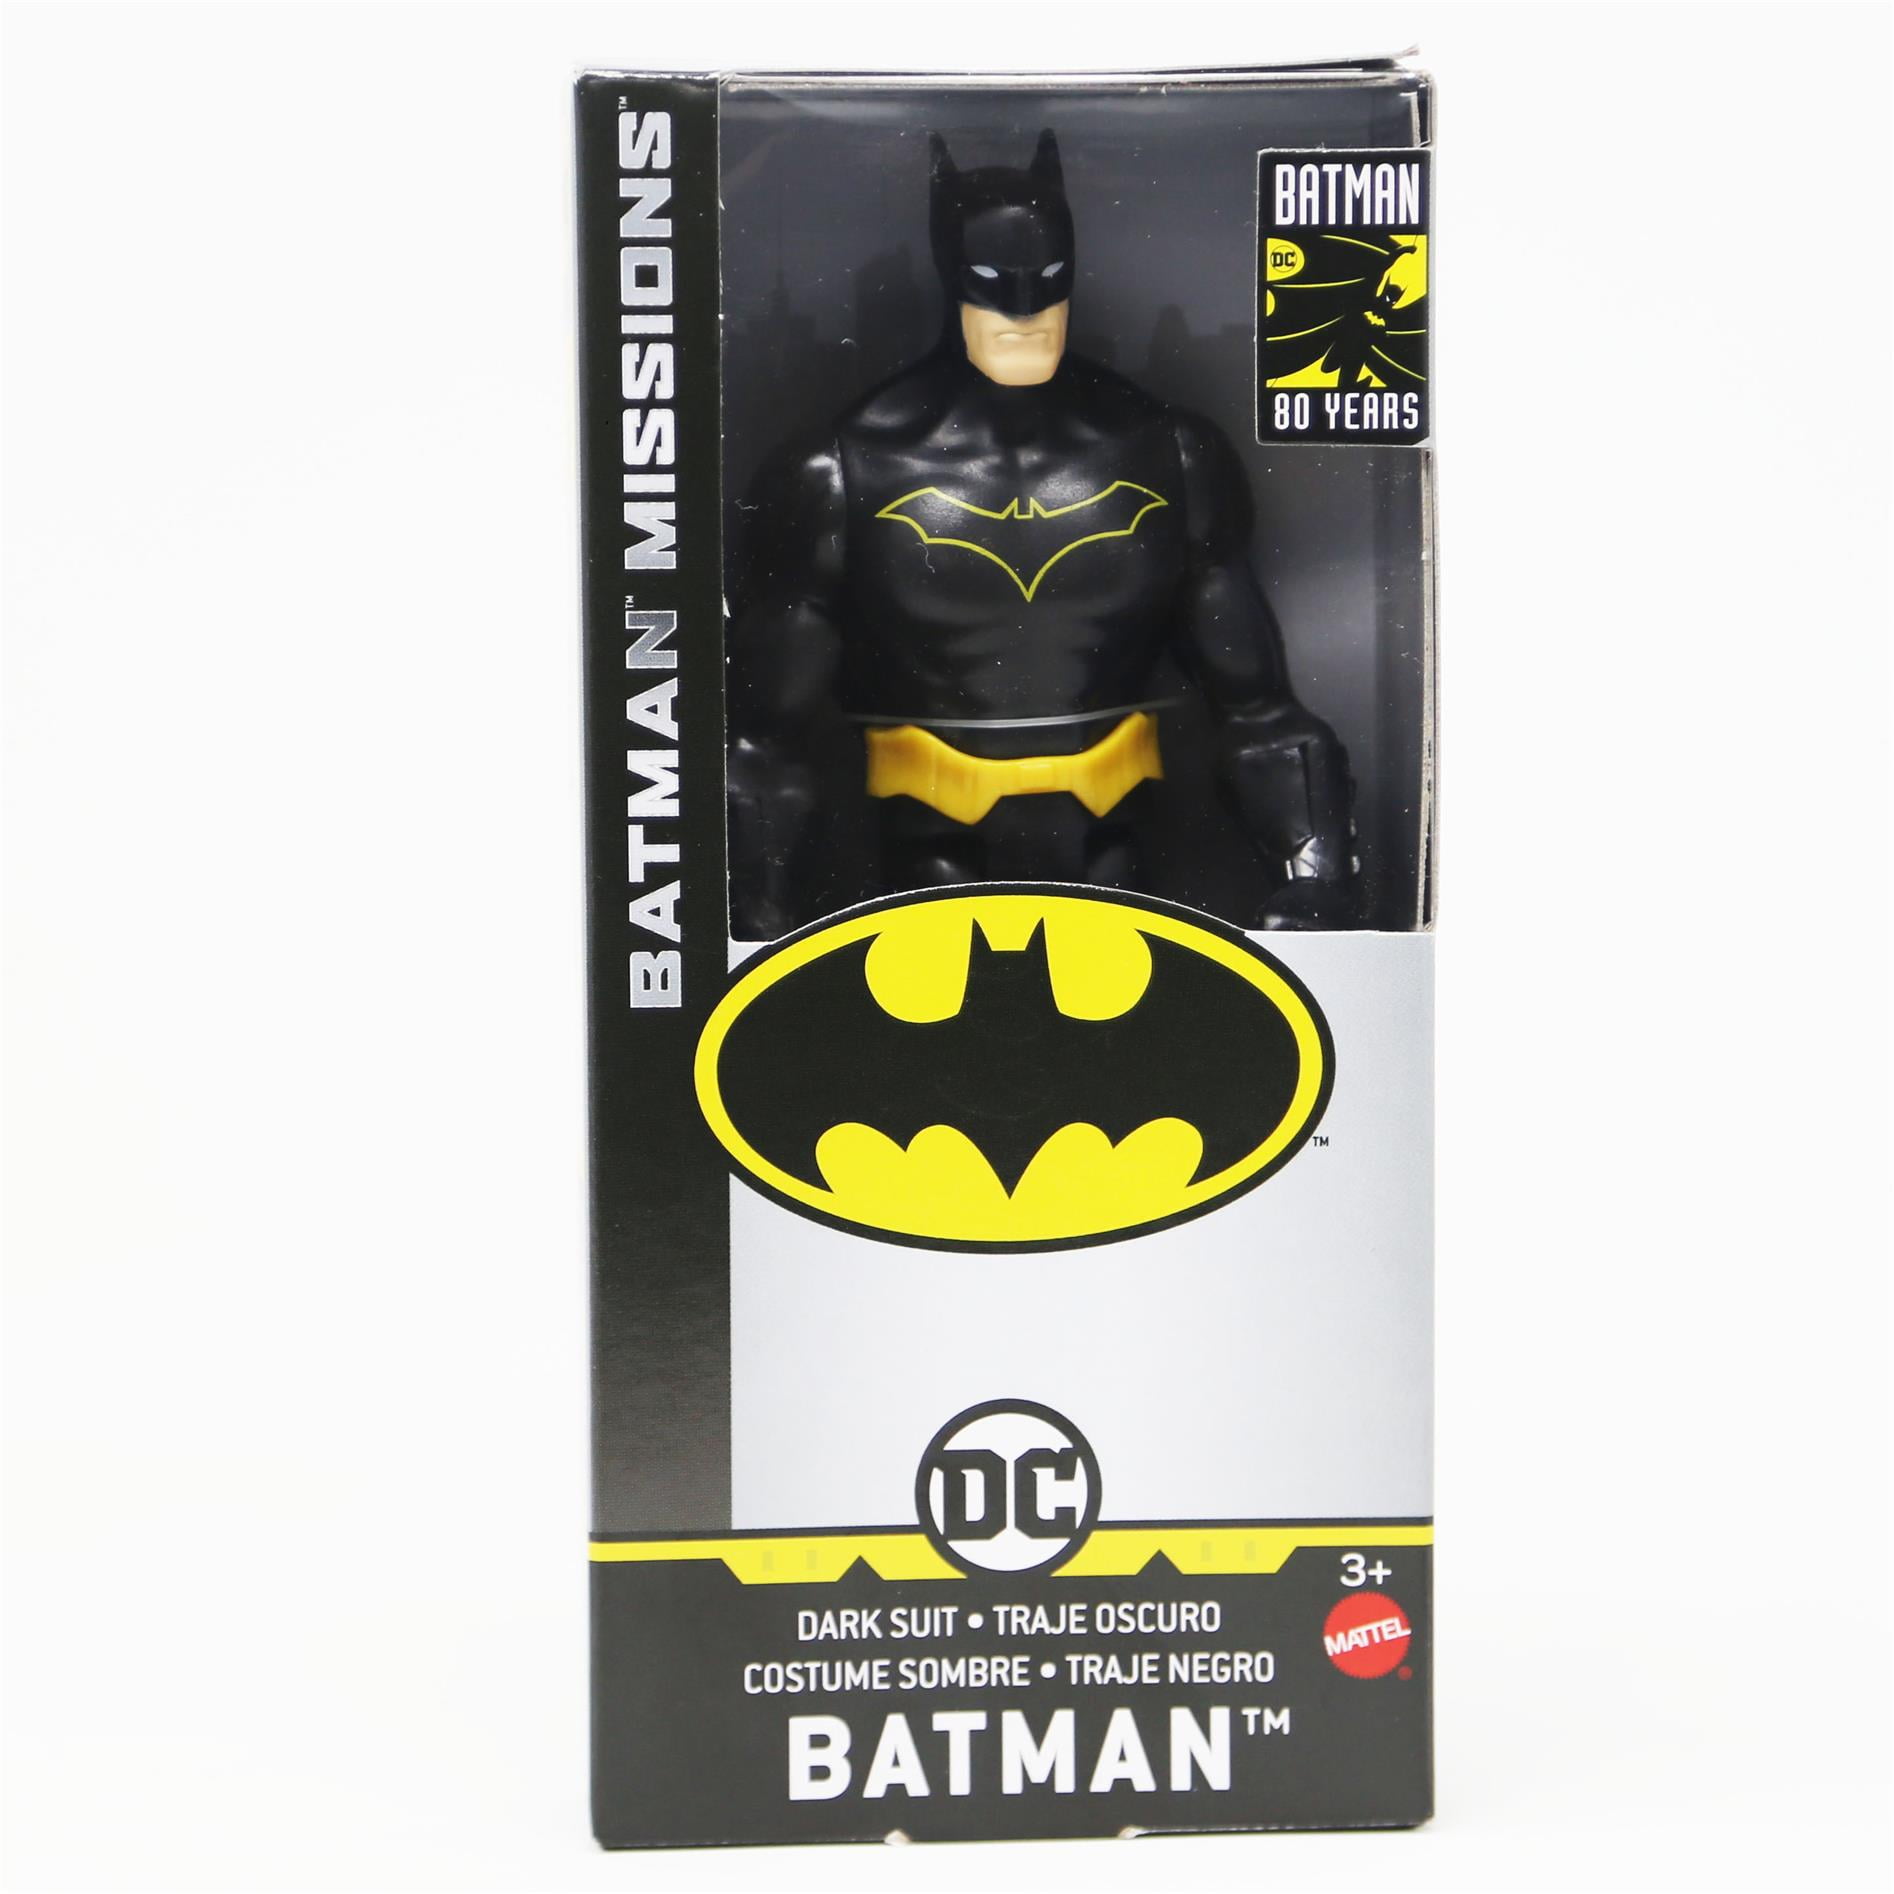 Batman Missions 6" Action Figure Dark Suit Costume 80 Years Mattel Ship for sale online 2 